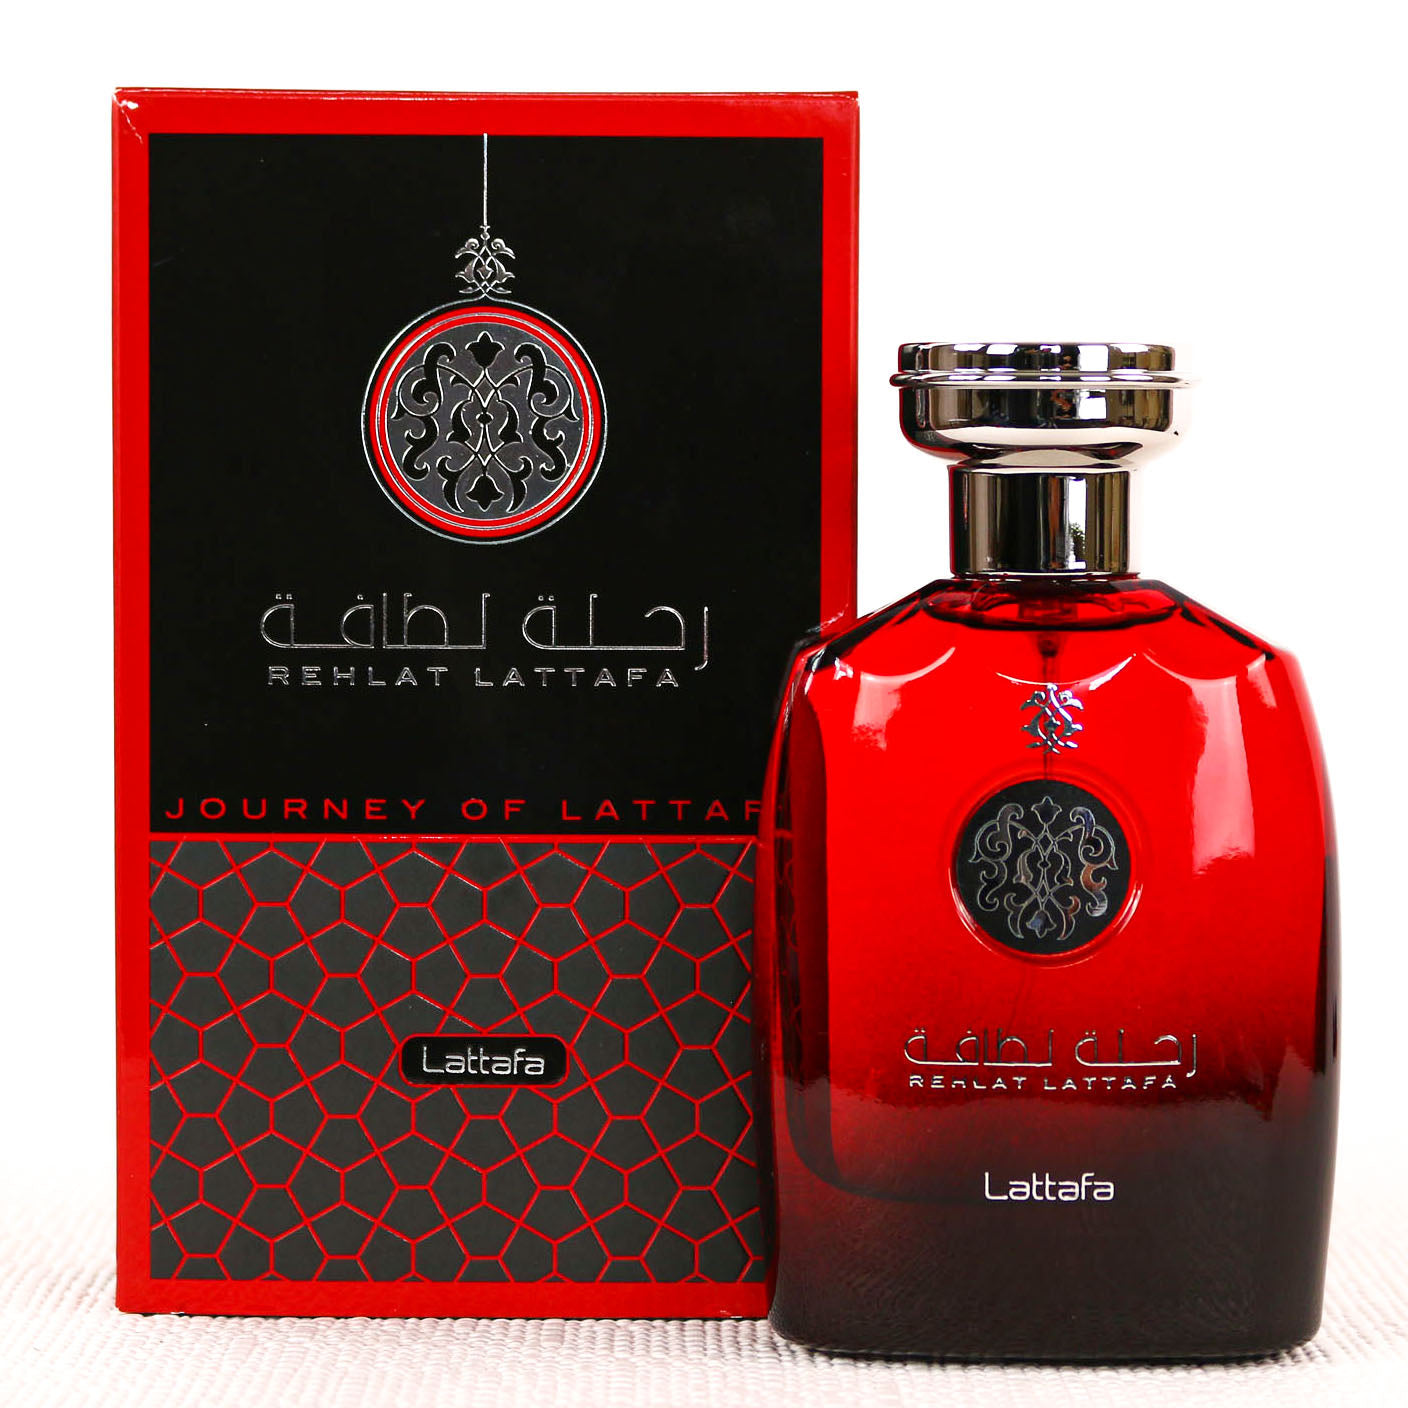 Rehlat Lattafa Eau de Parfum 100ml By Lattafa-almanaar Islamic Store